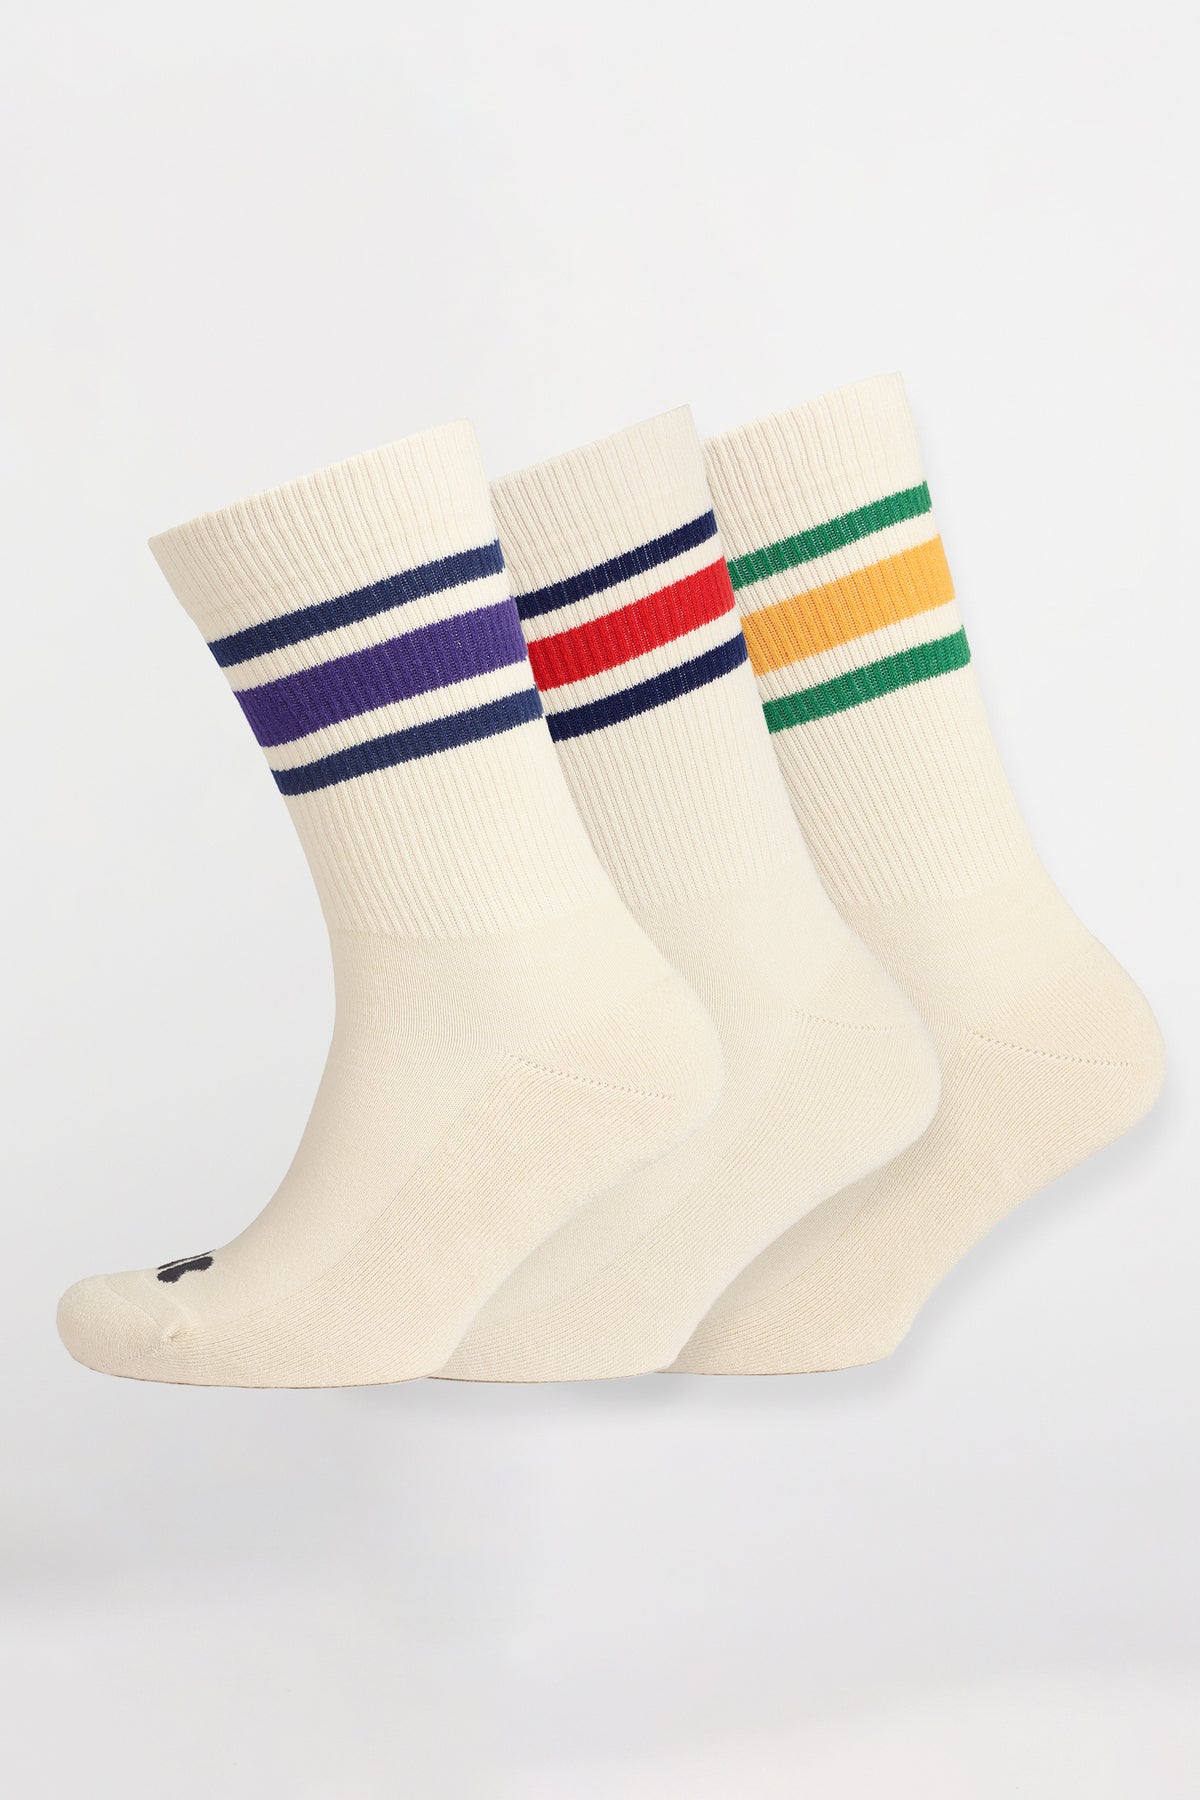 
            Product shot showing 3 pack of sport calf socks in ecru/multi stripes.